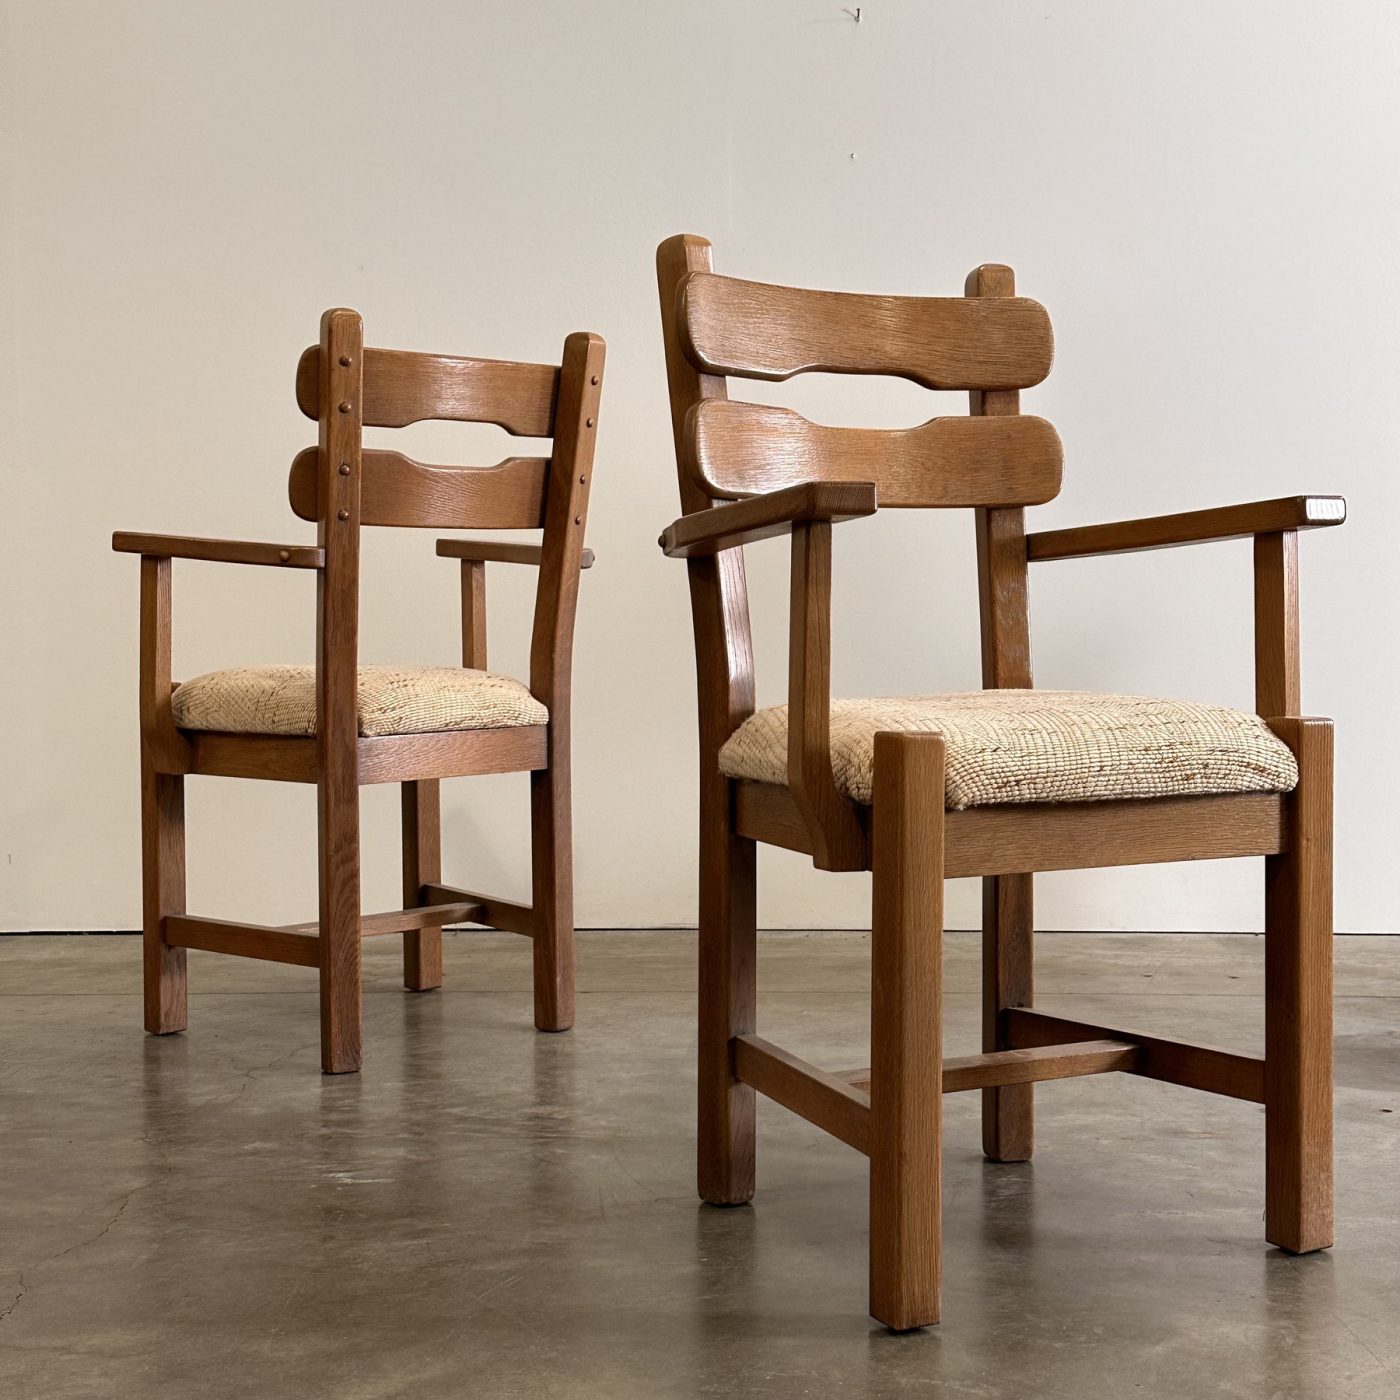 objet-vagabond-brutalist-armchairs0008